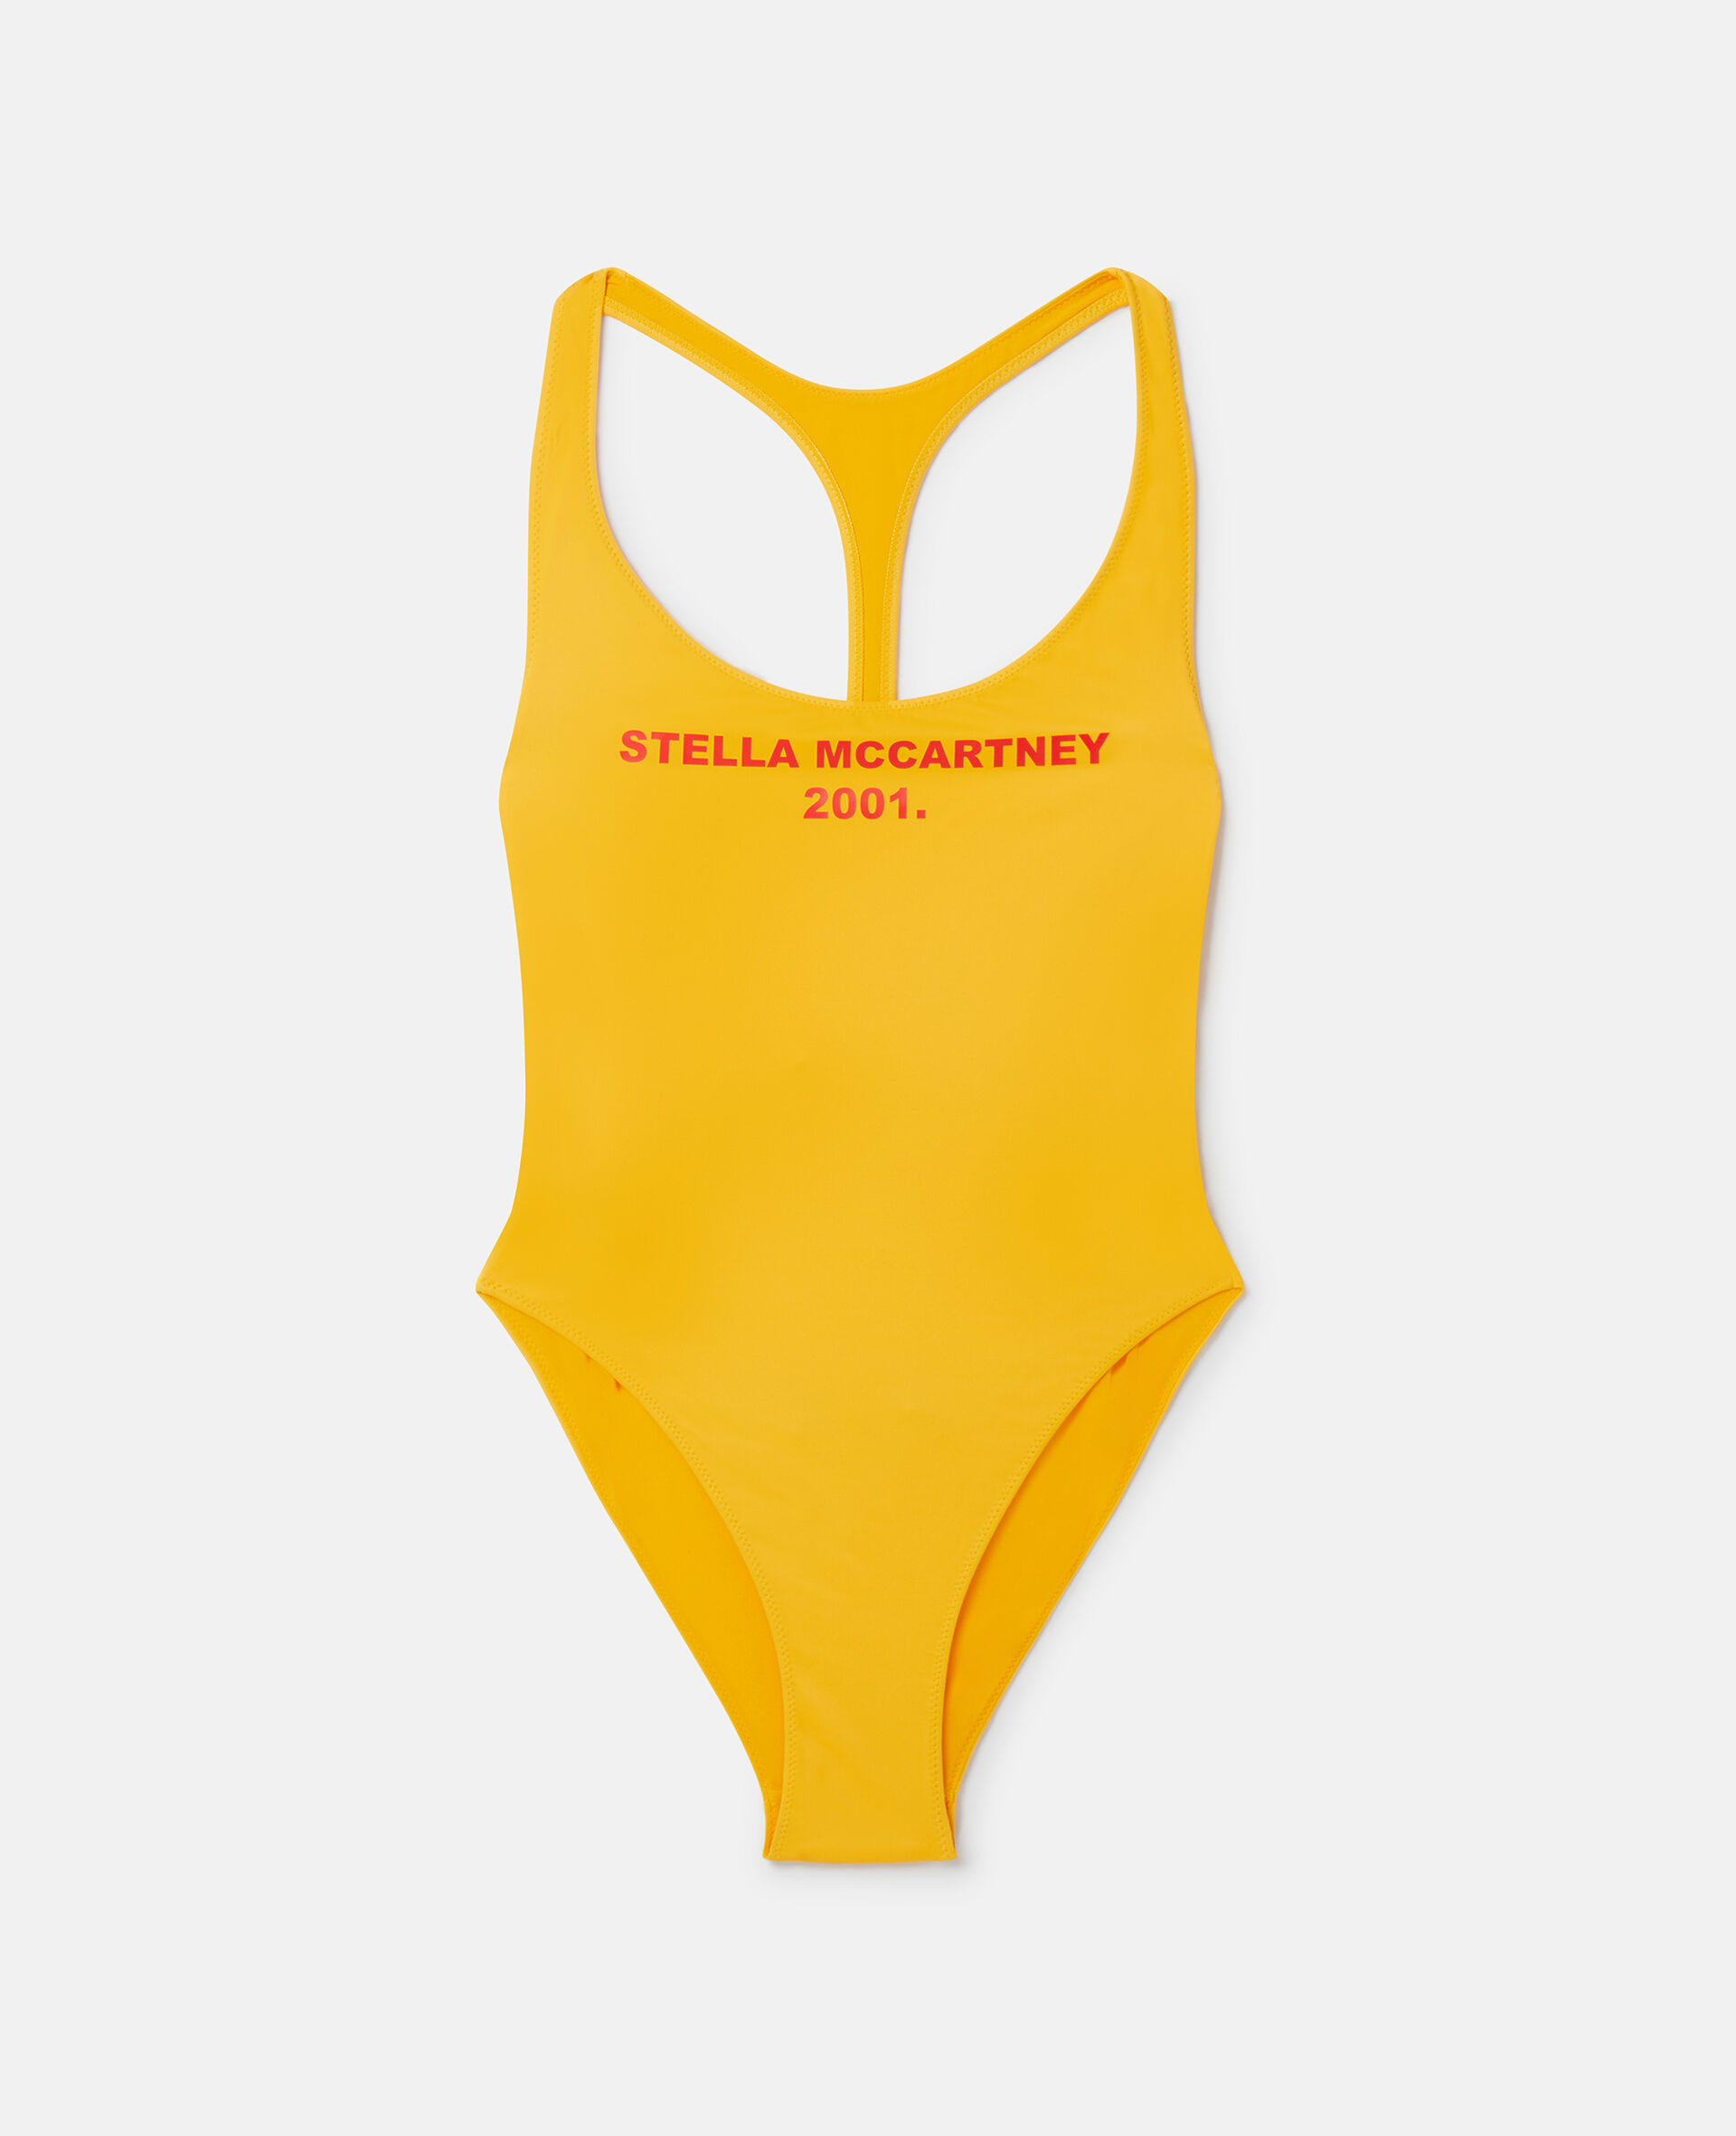 Stella McCartney 2001. Print Swimsuit-Yellow-medium